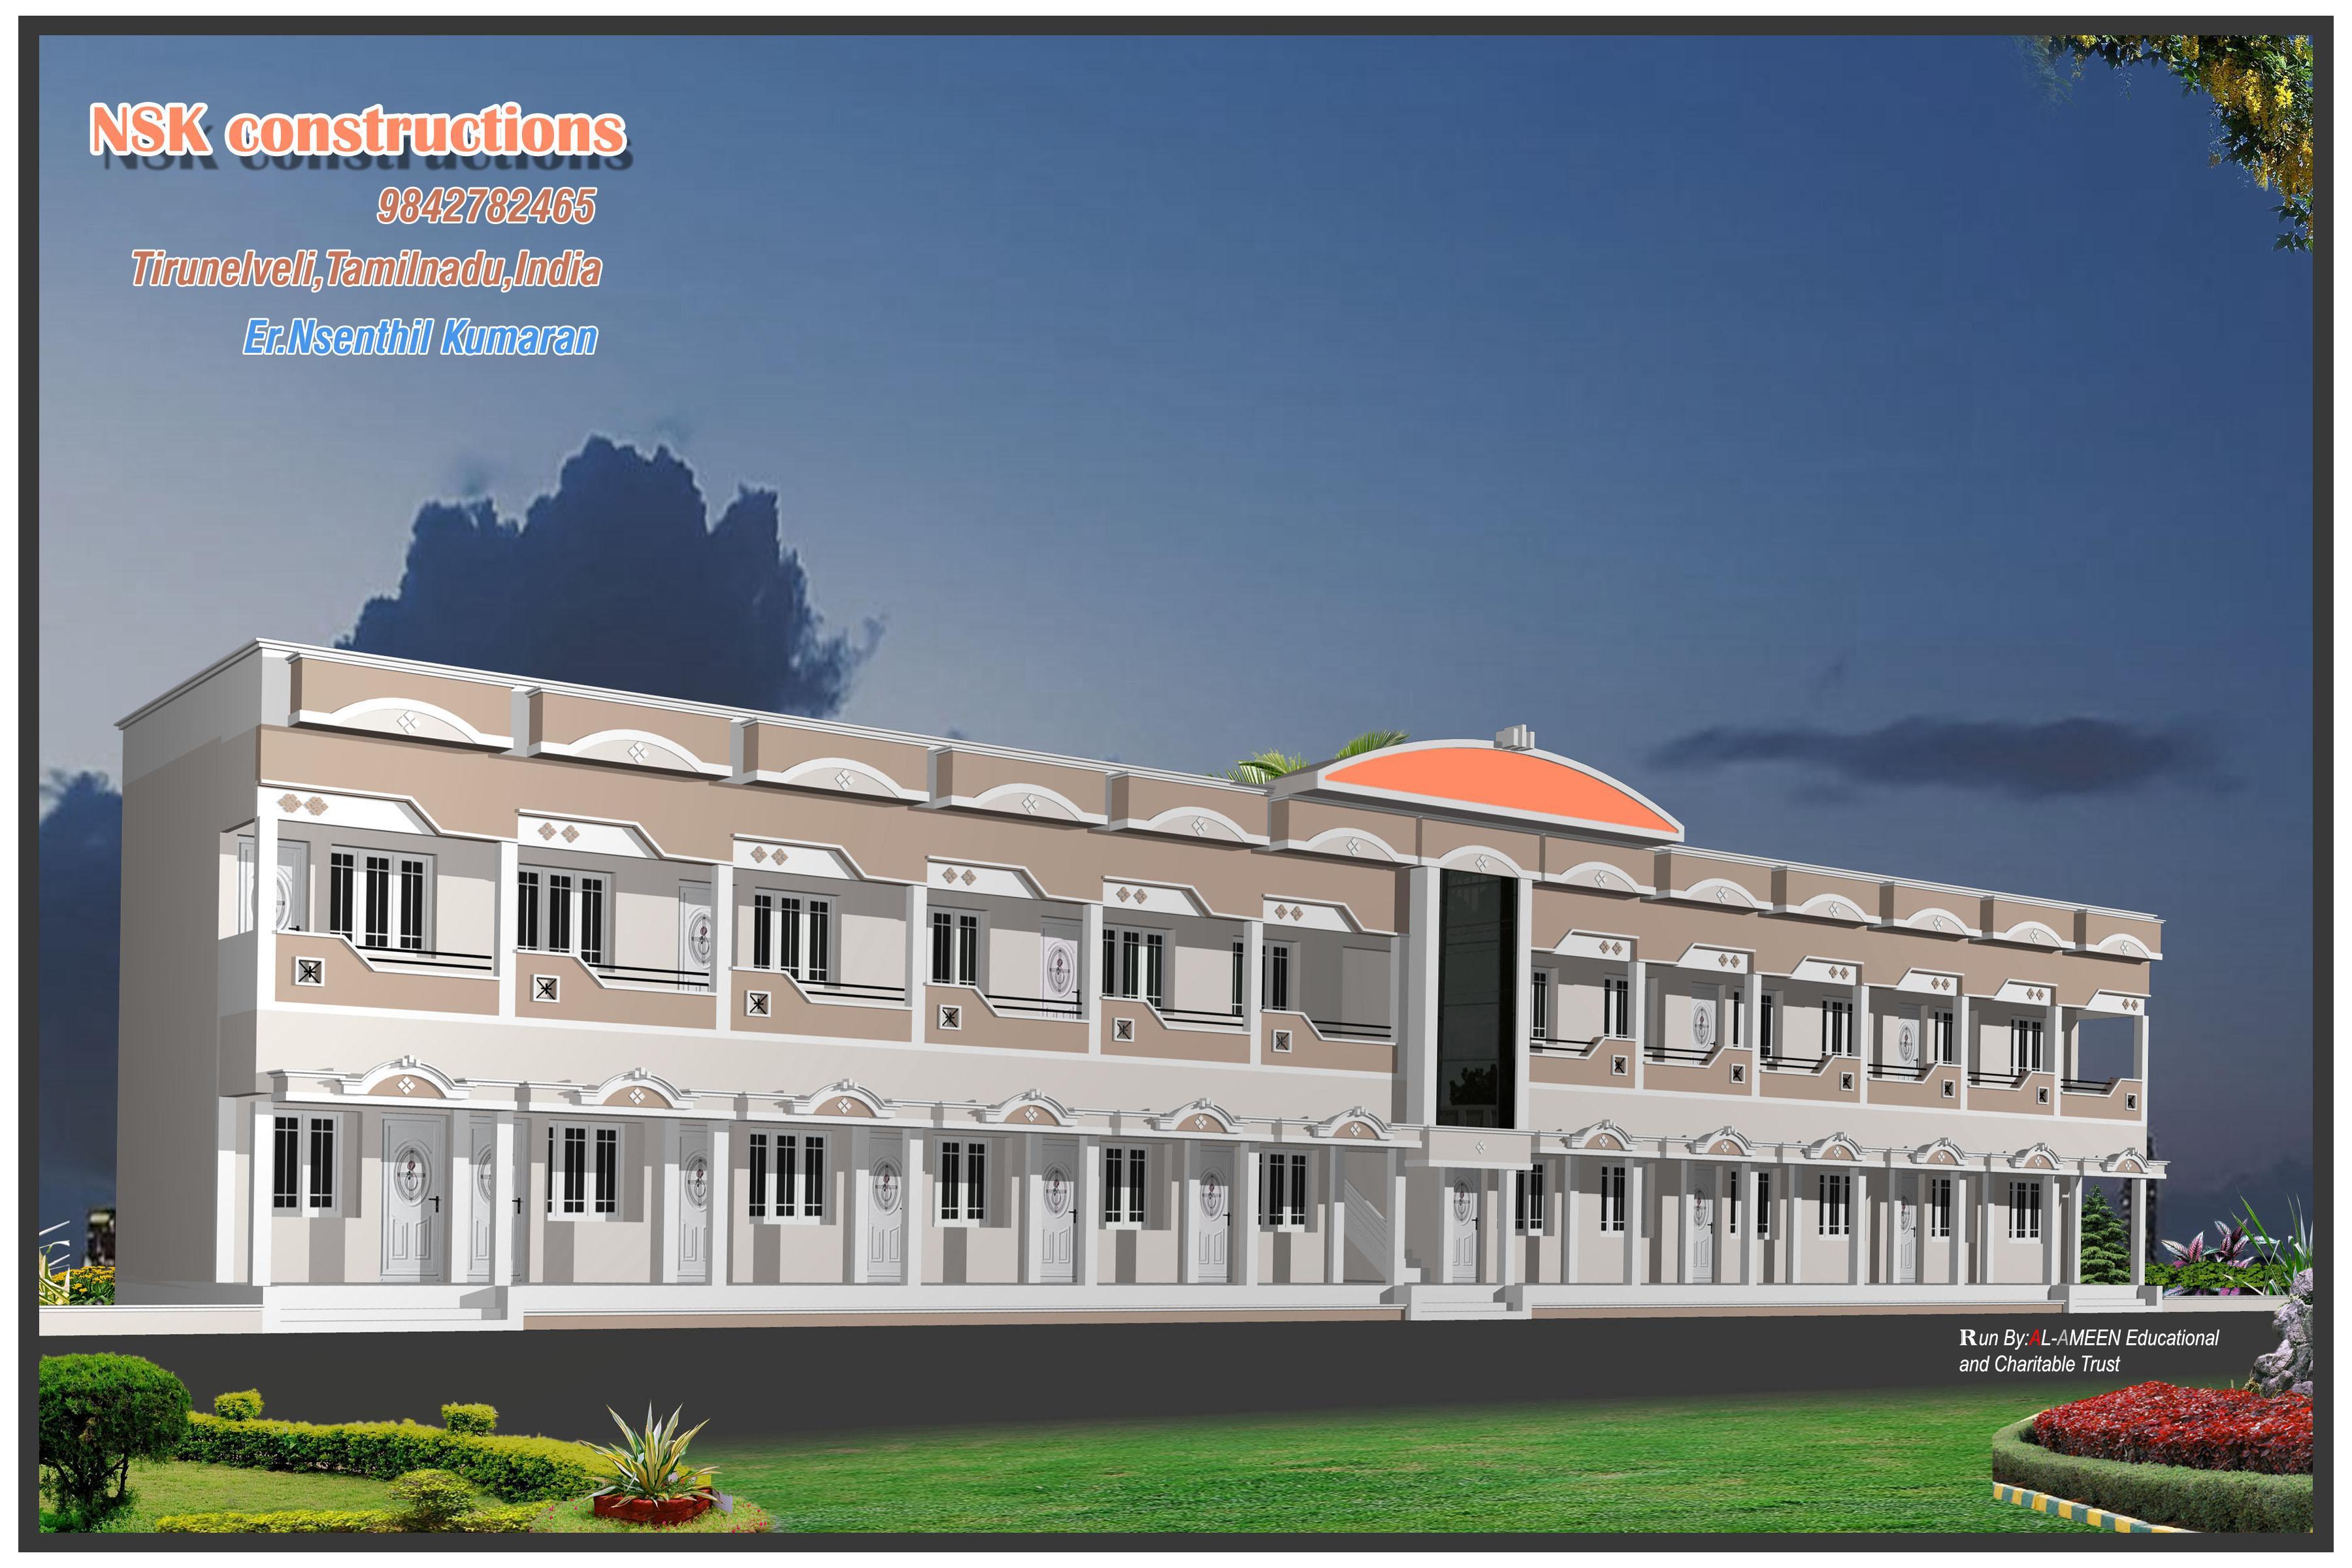 Elevation of school building